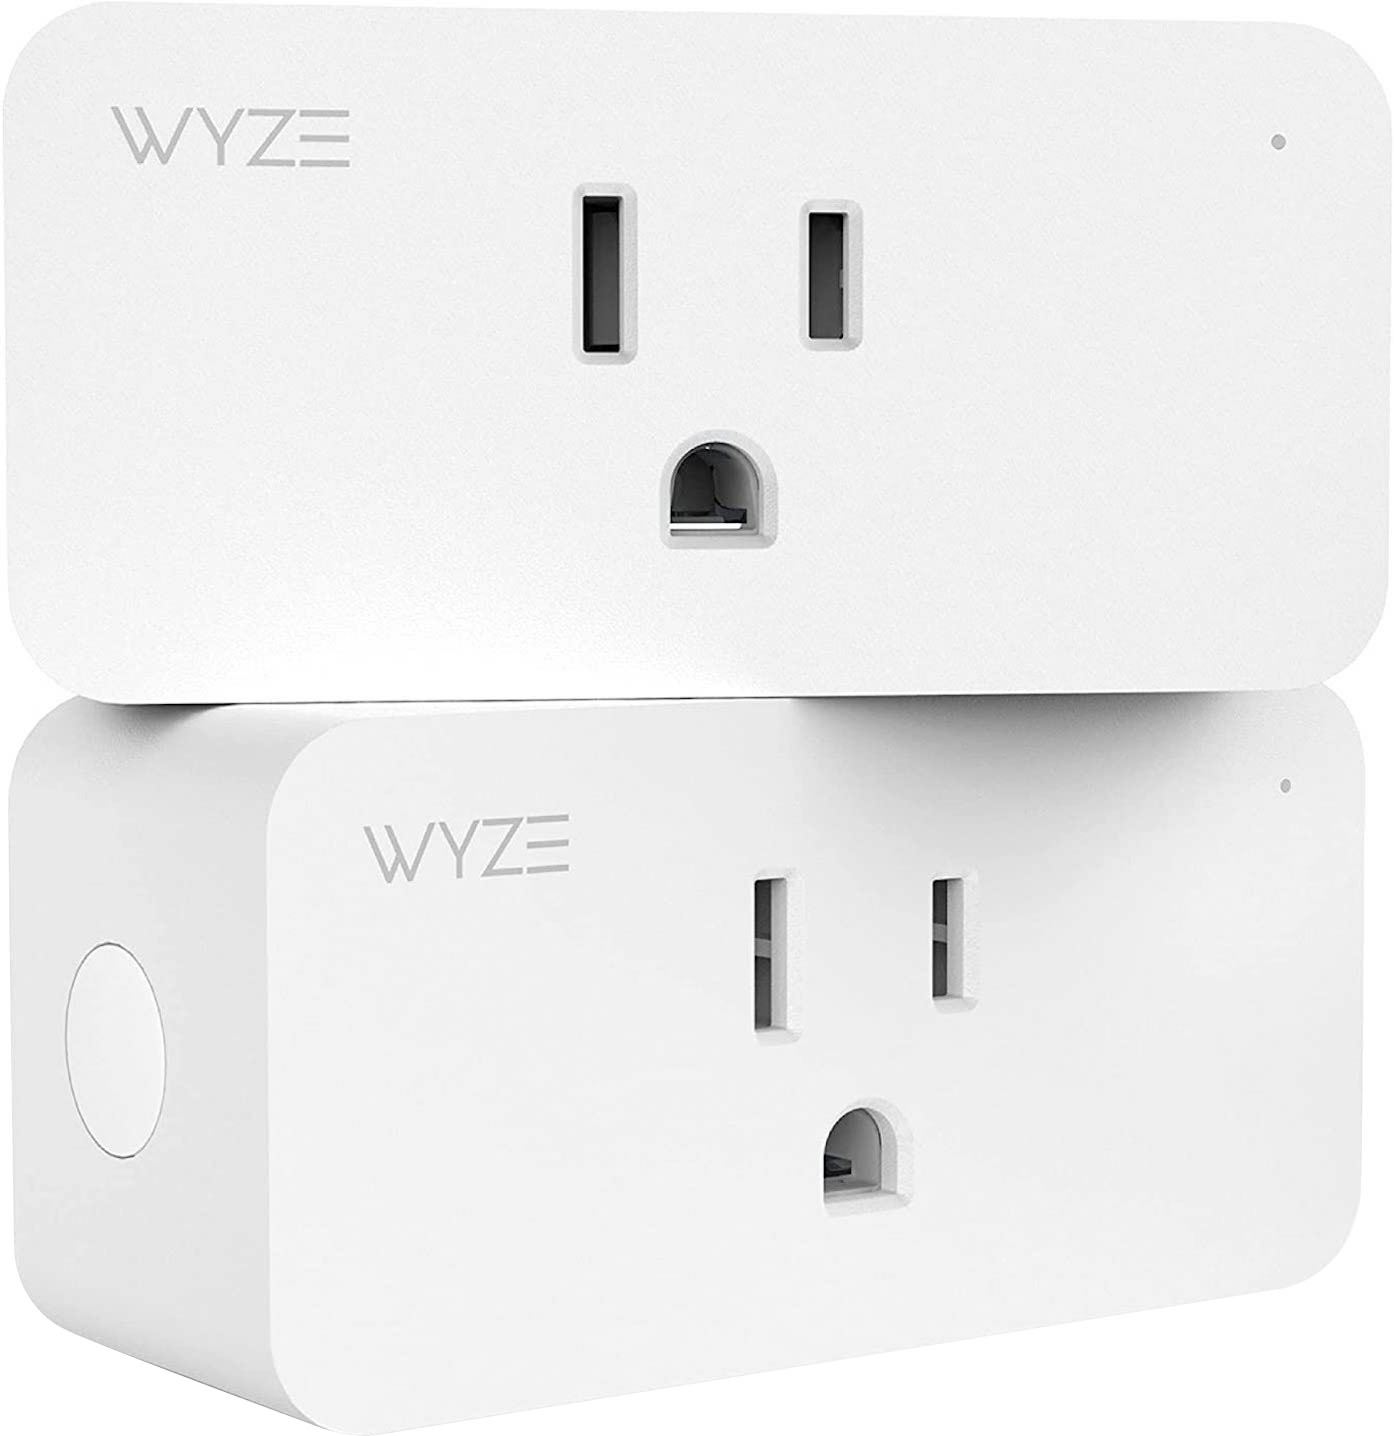 Array by Hampton Smart Wi-Fi Plug White HE1001 - Best Buy